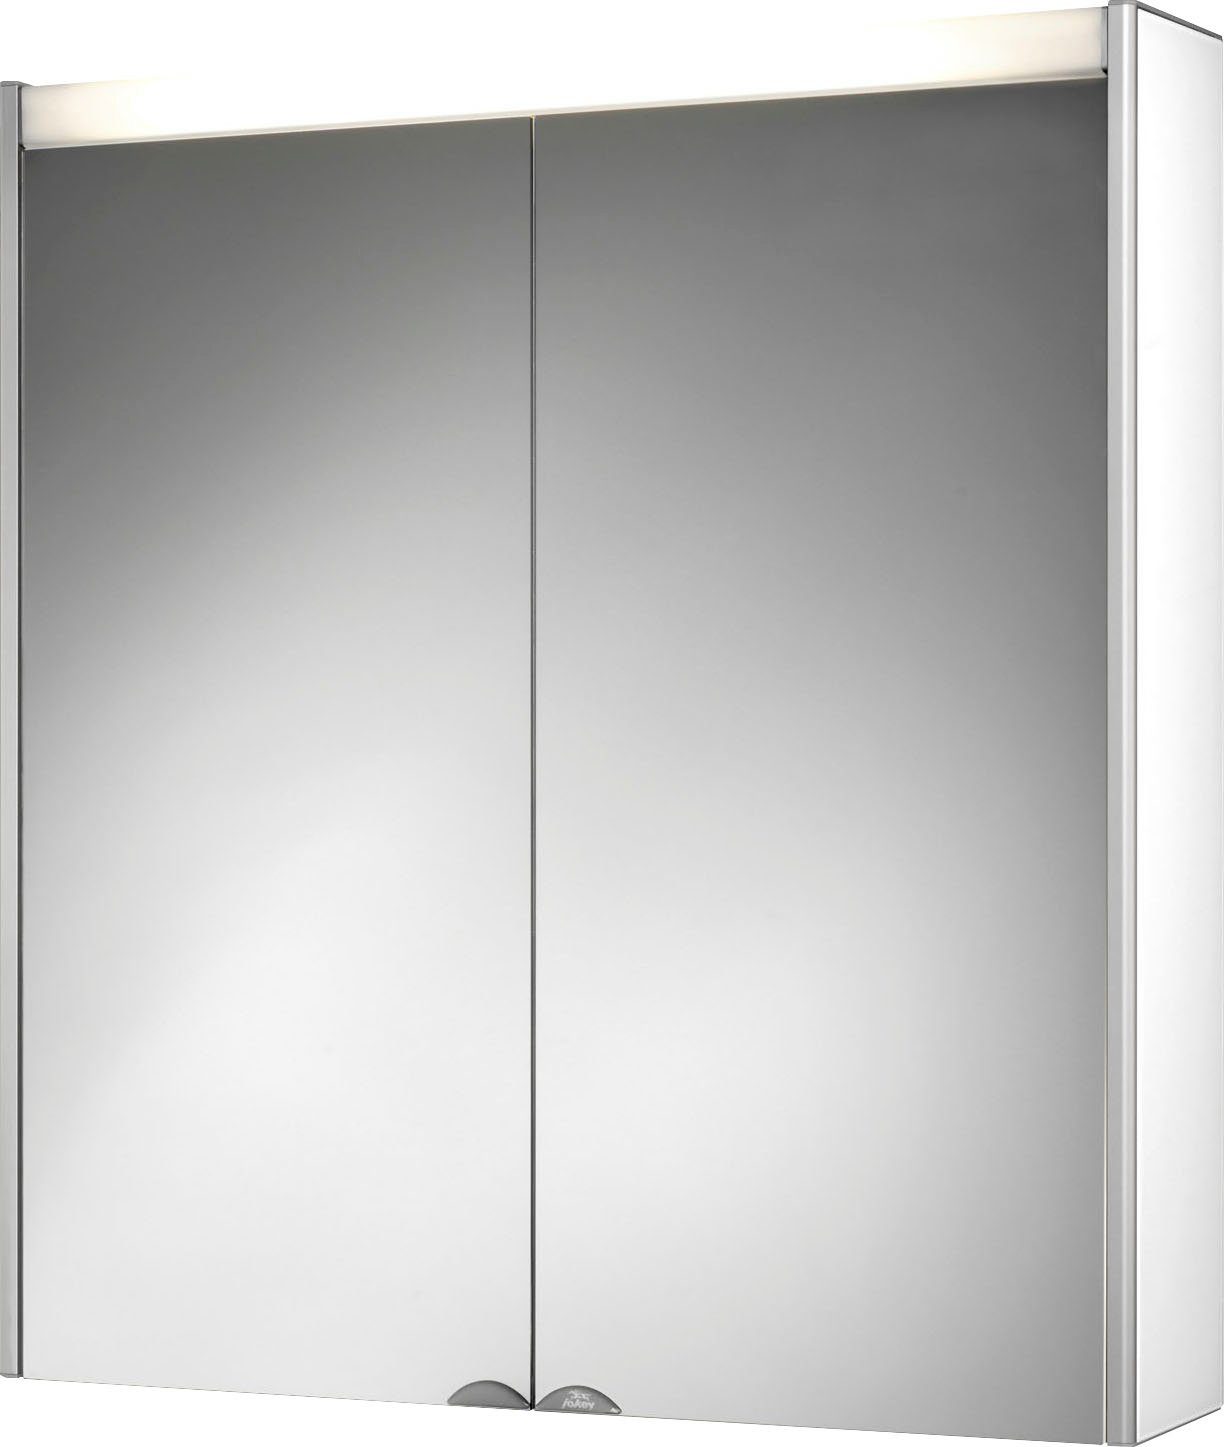 jokey Spiegelschrank Dekor Alu LED | Aluminium, breit 65,4cm Aluminium/Weiß Weiß